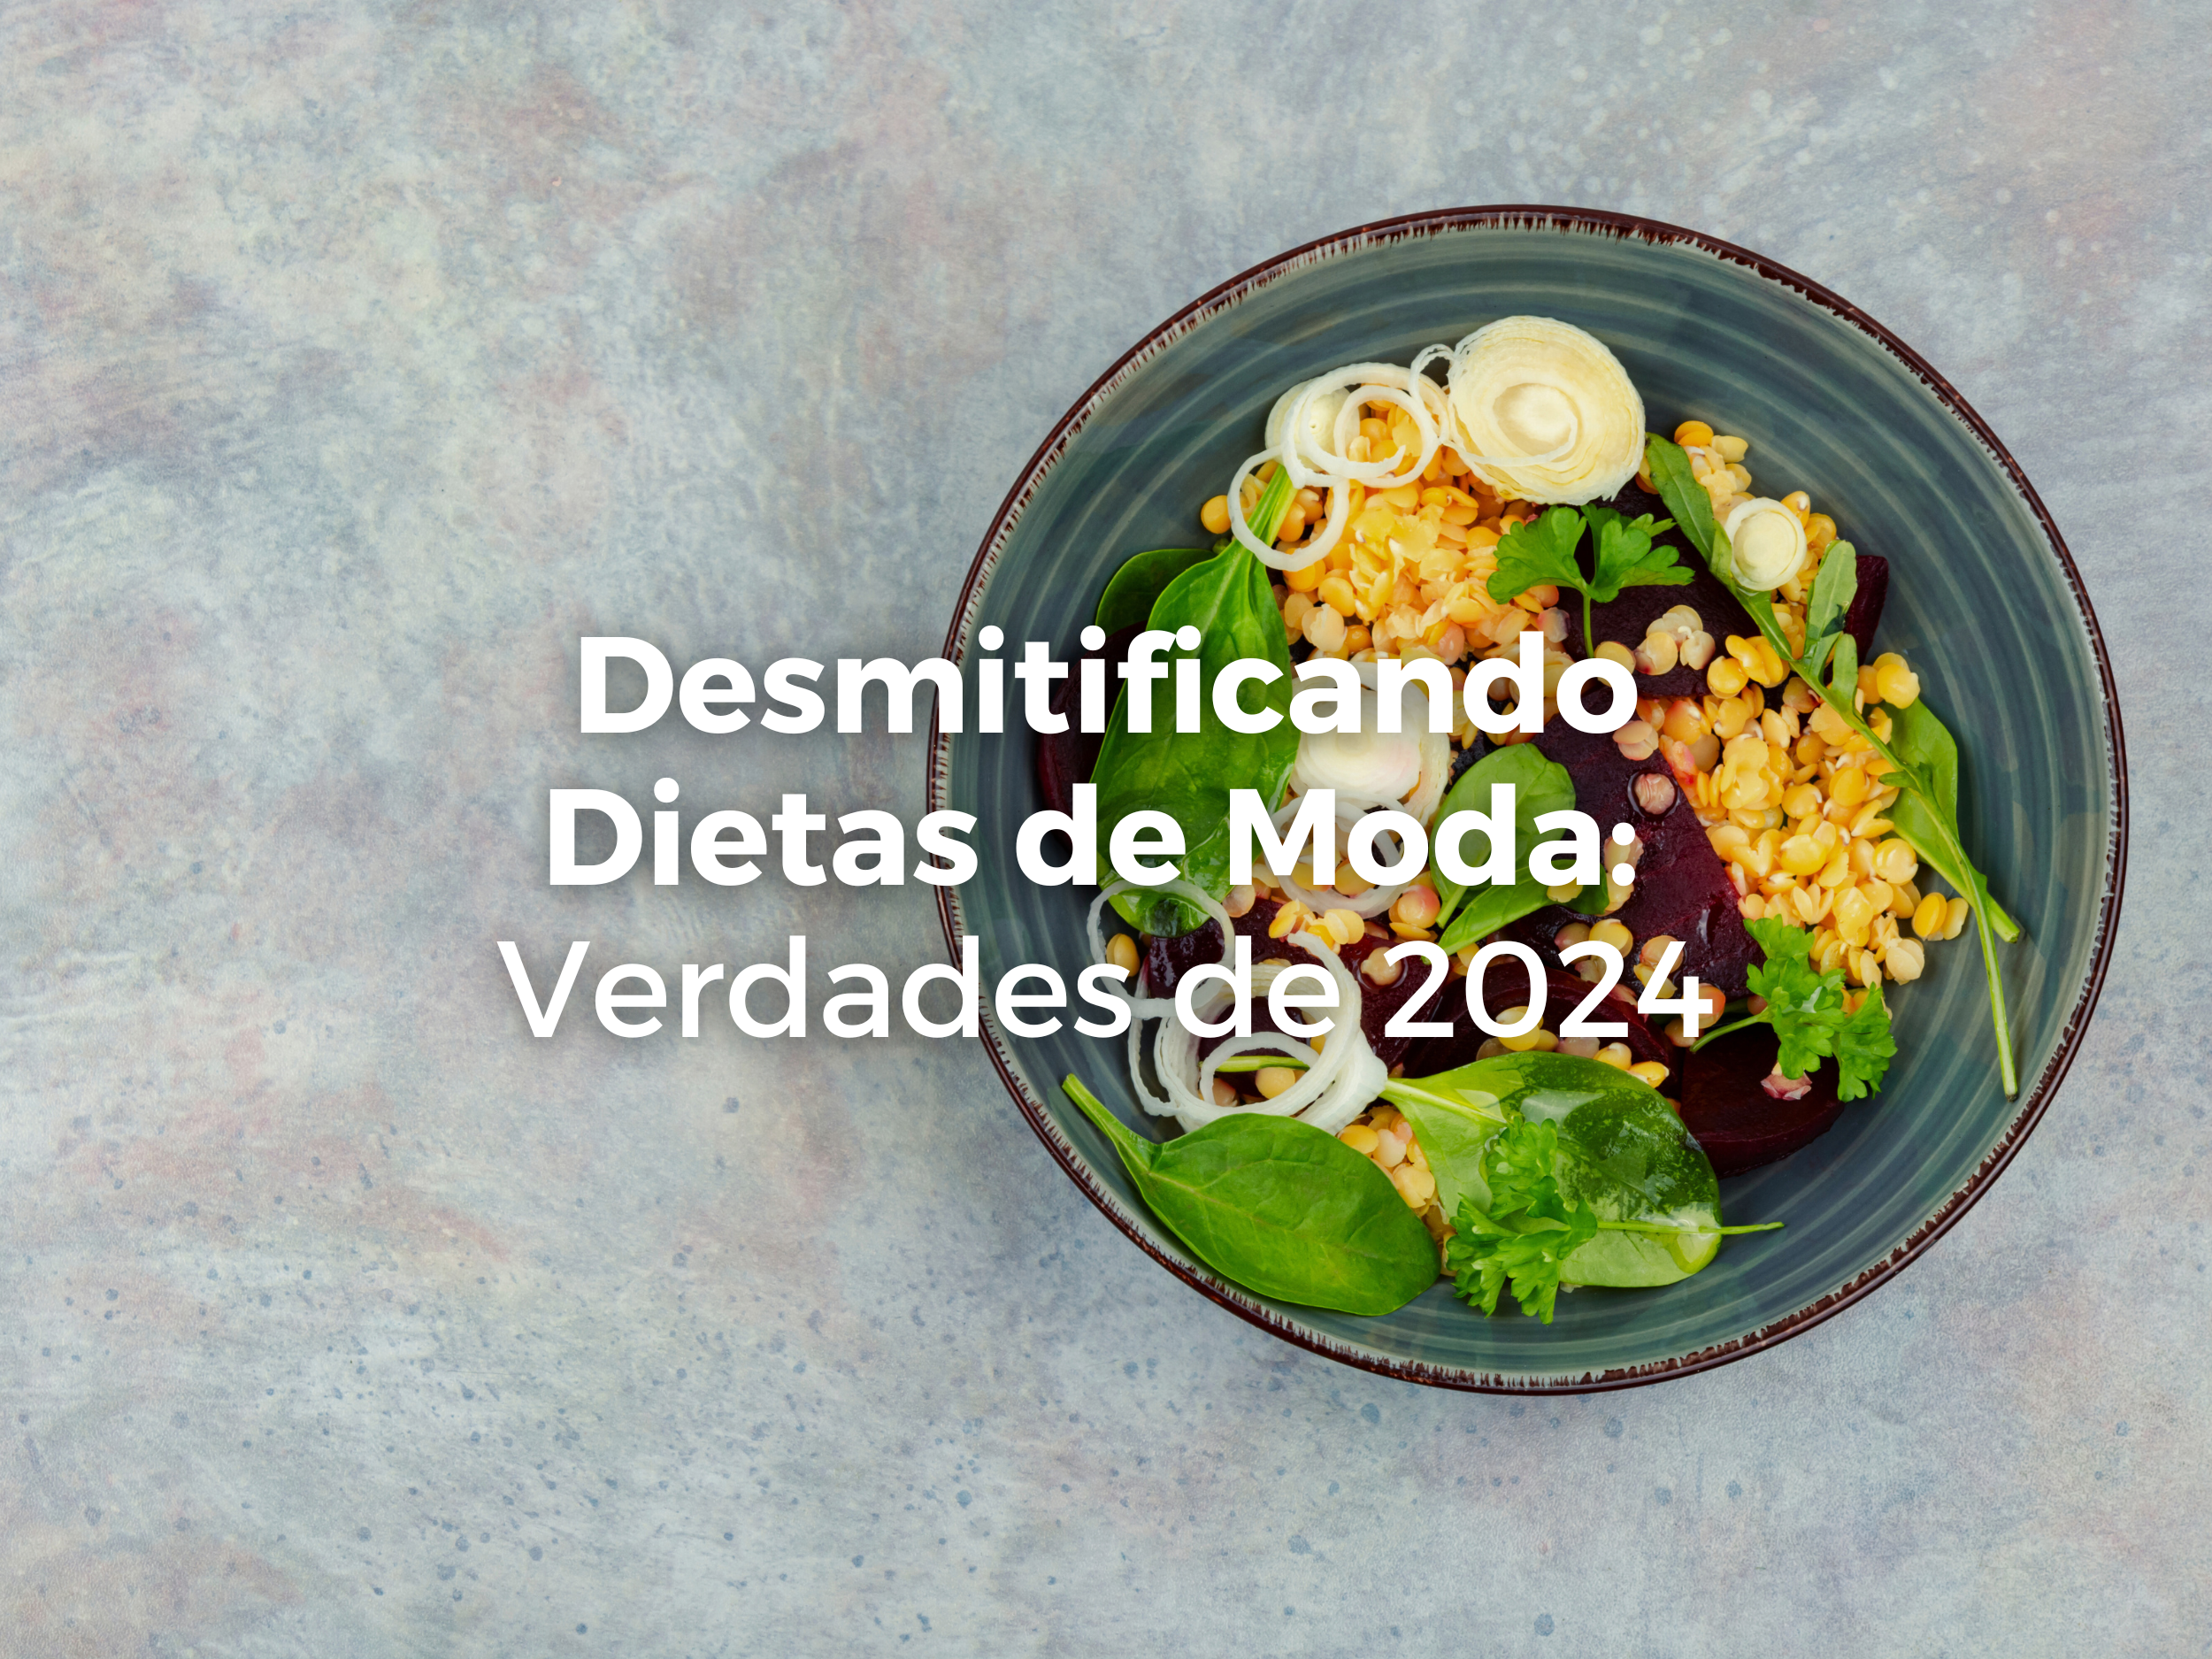 Desmitificando Dietas de Moda: Verdades de 2024